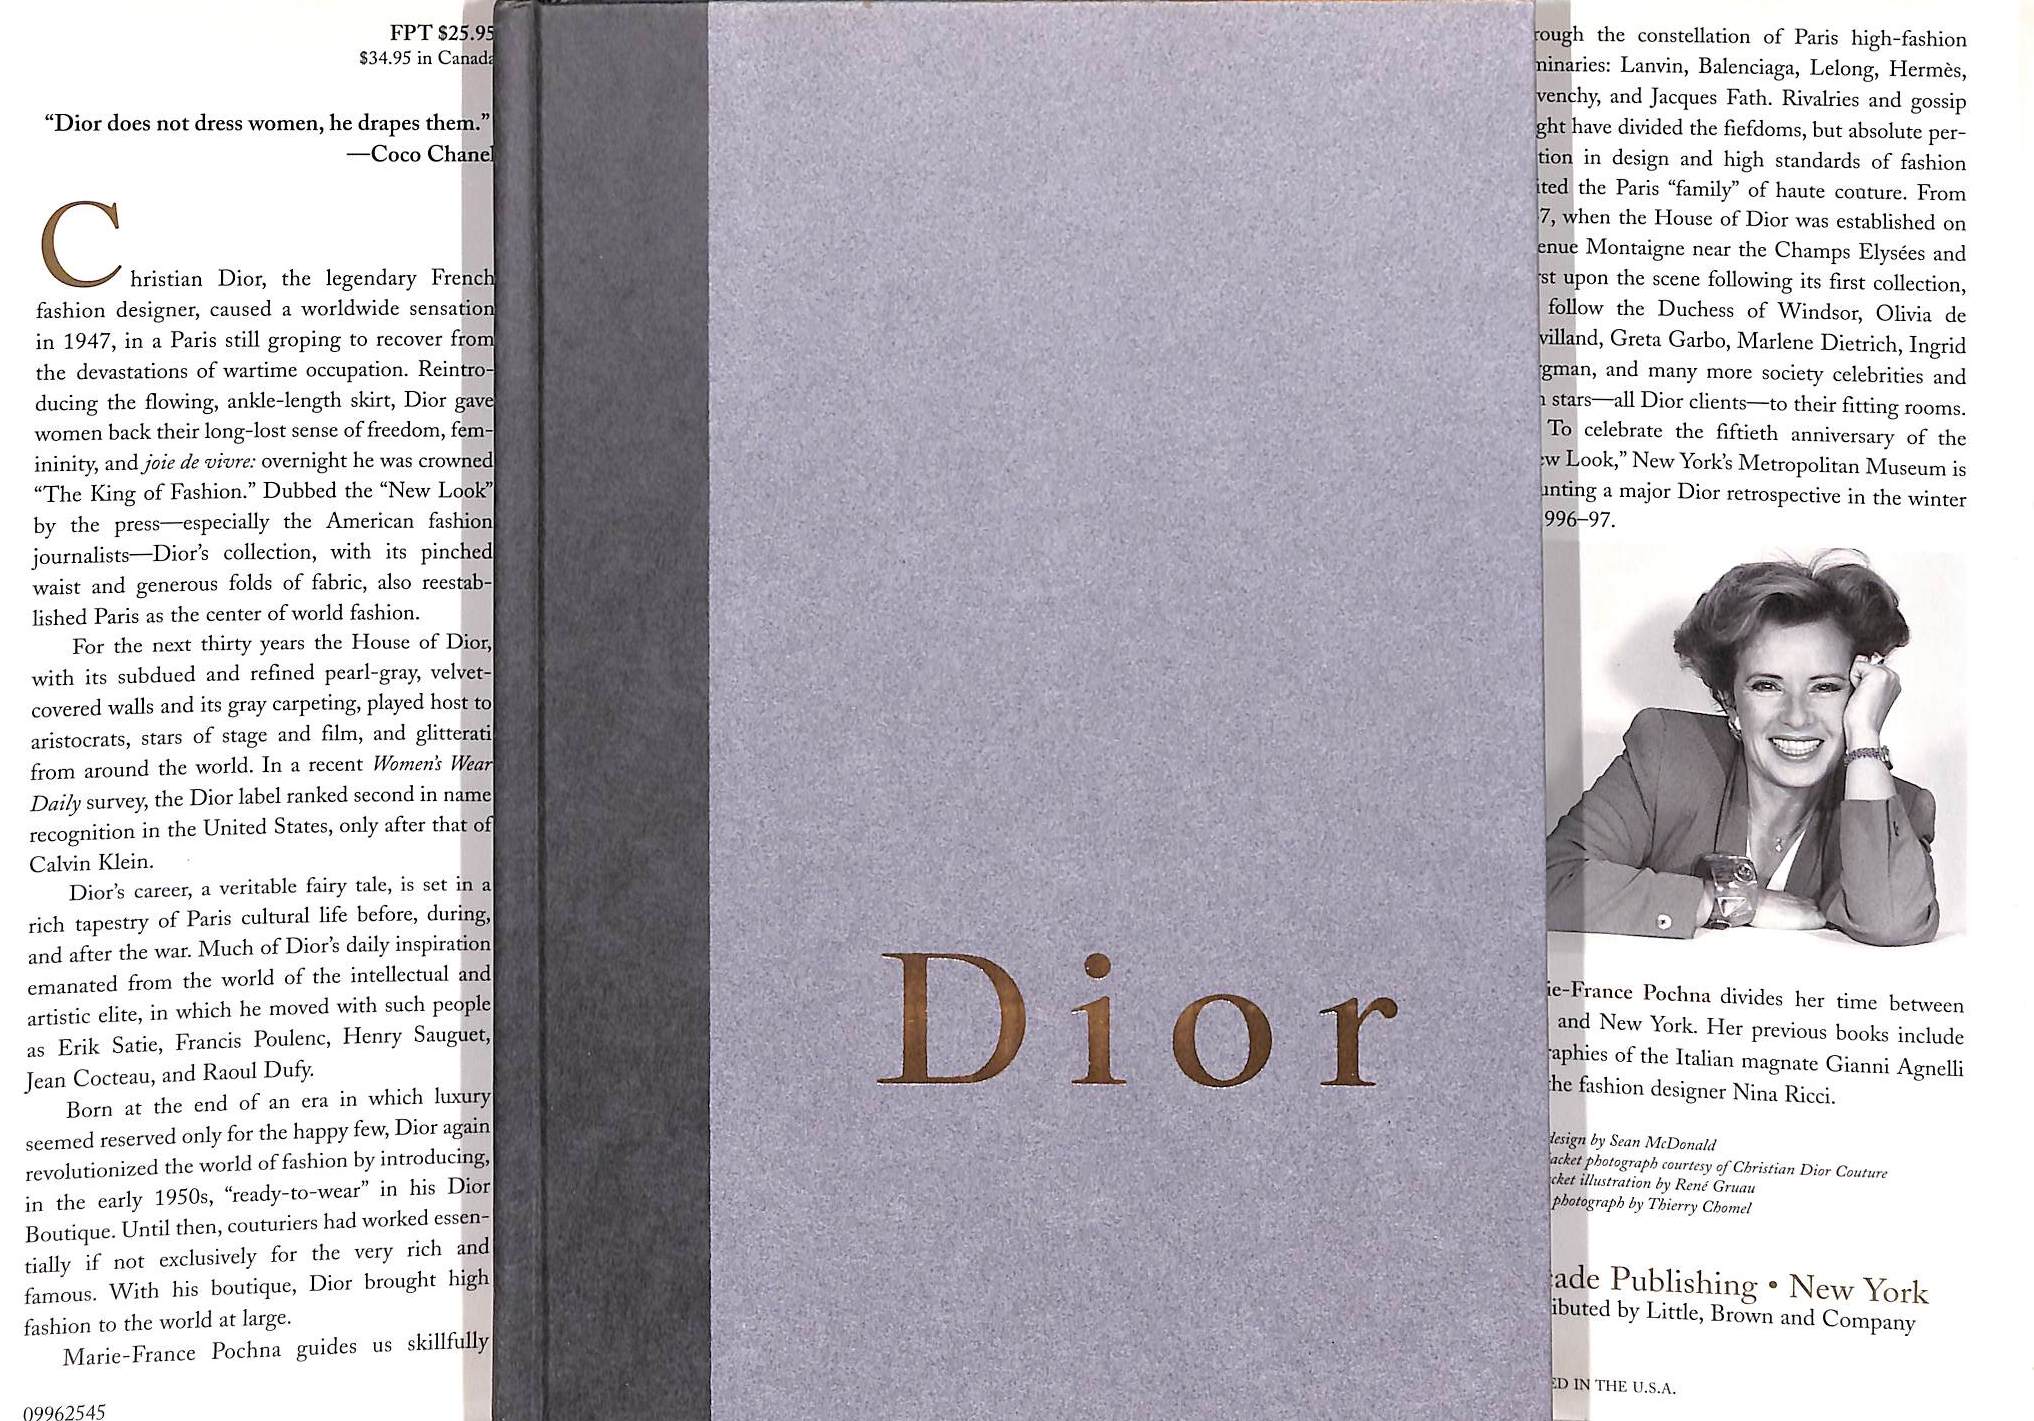 Christian Dior - Life, Fashion & Career